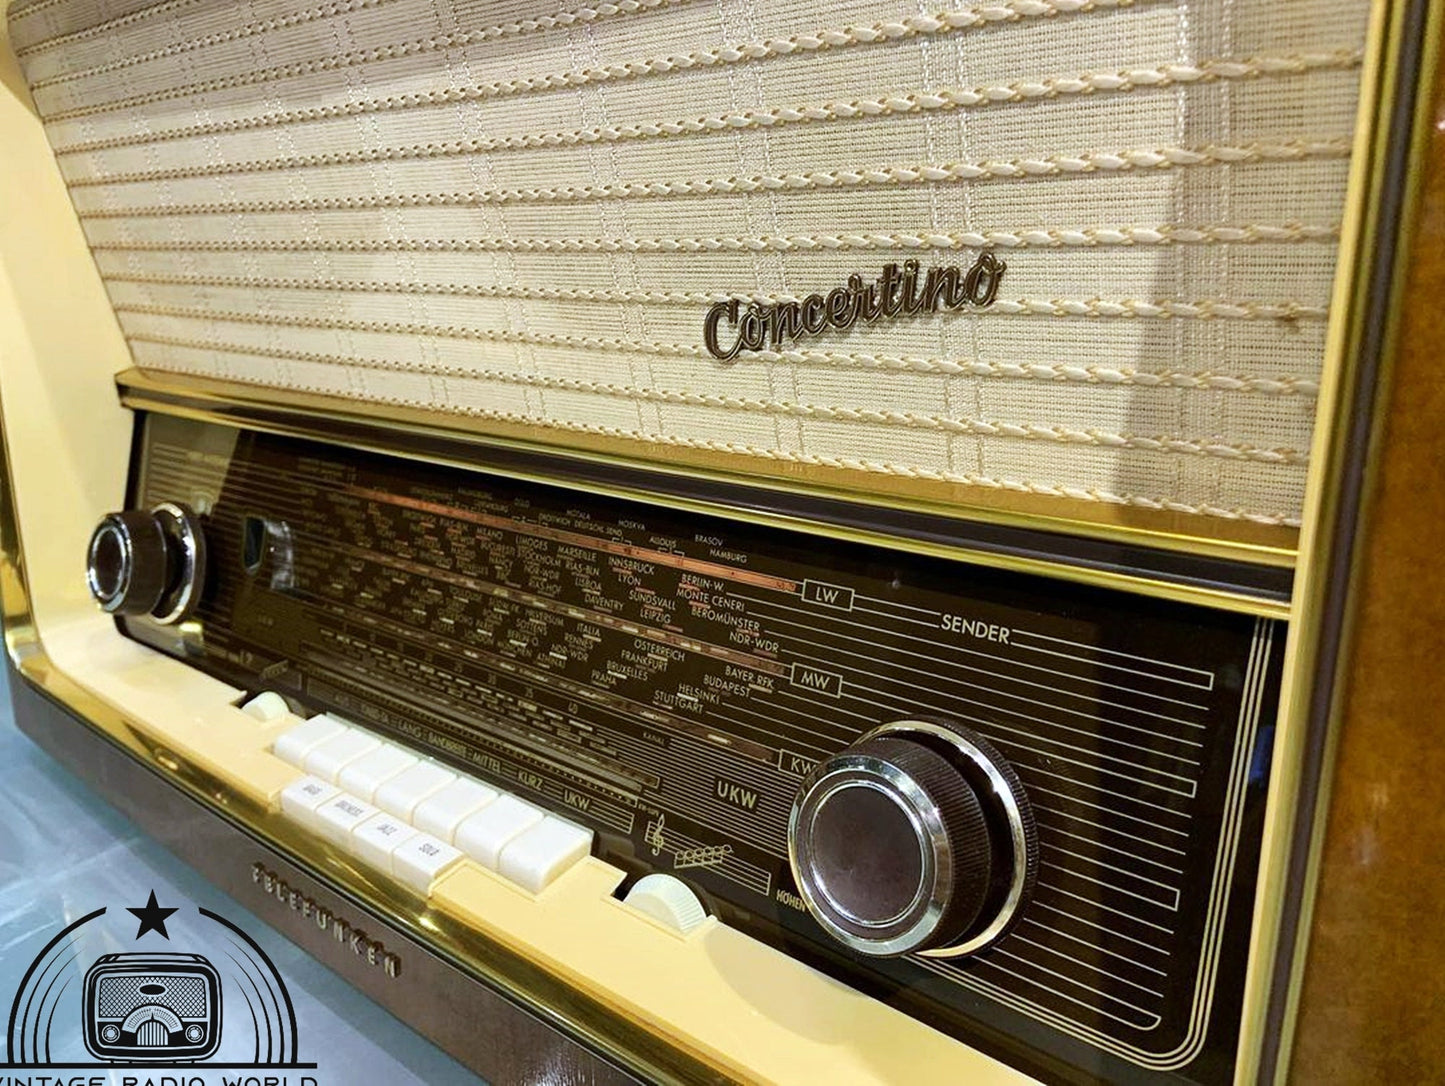 Telefunken Concertino Radio | Vintage Radio | Orjinal Old Radio | Radio | Lamp Radio | Telefunken Radio